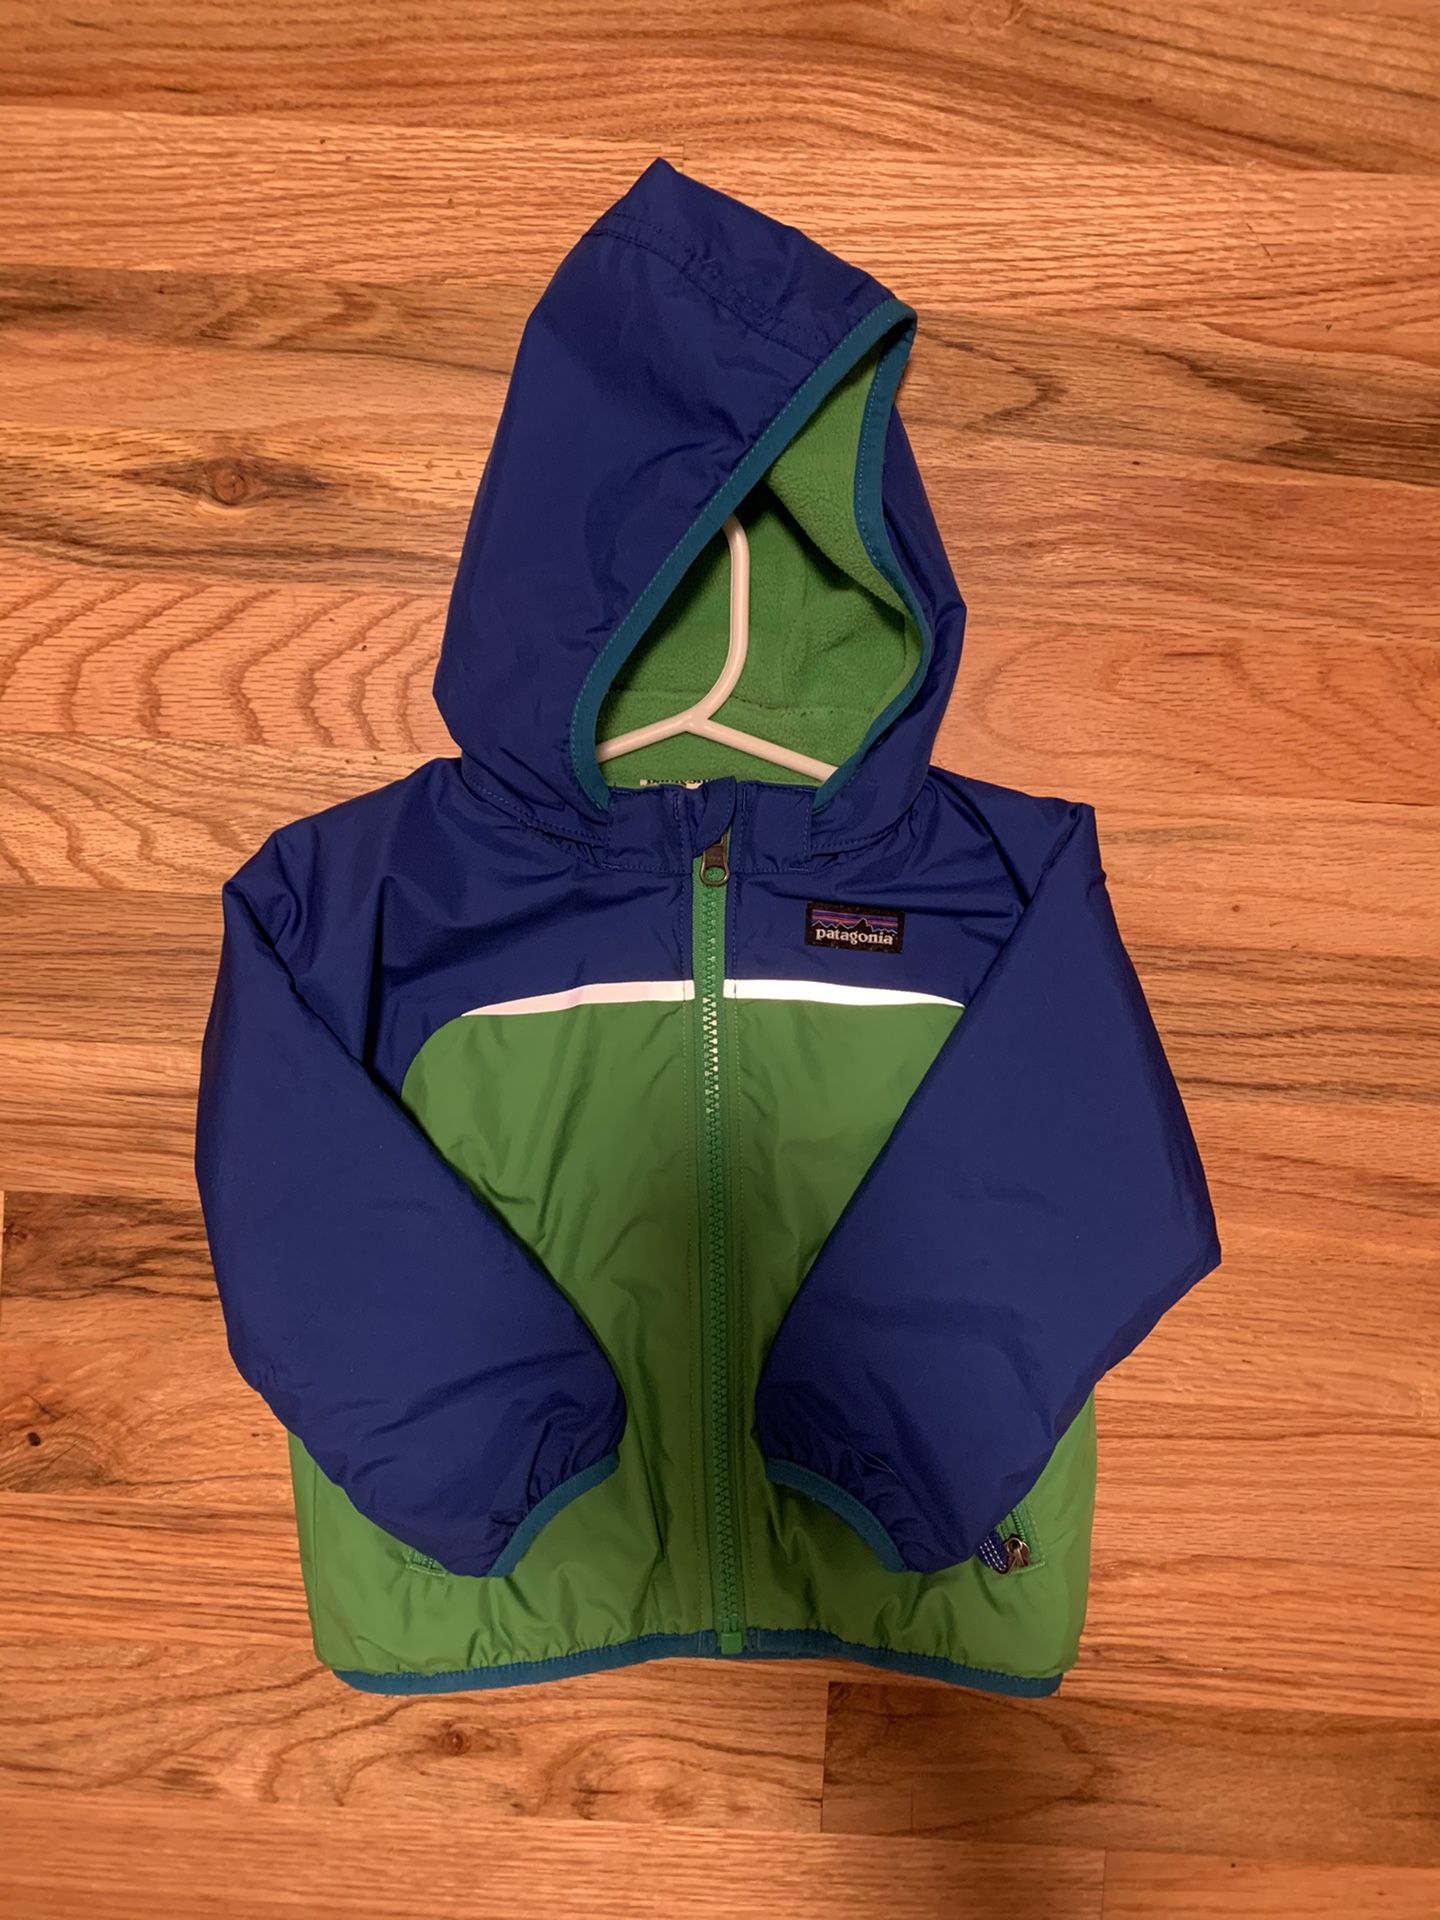 Kids 12M Patagonia Reversible Jacket/Fleece with removable Hoodie